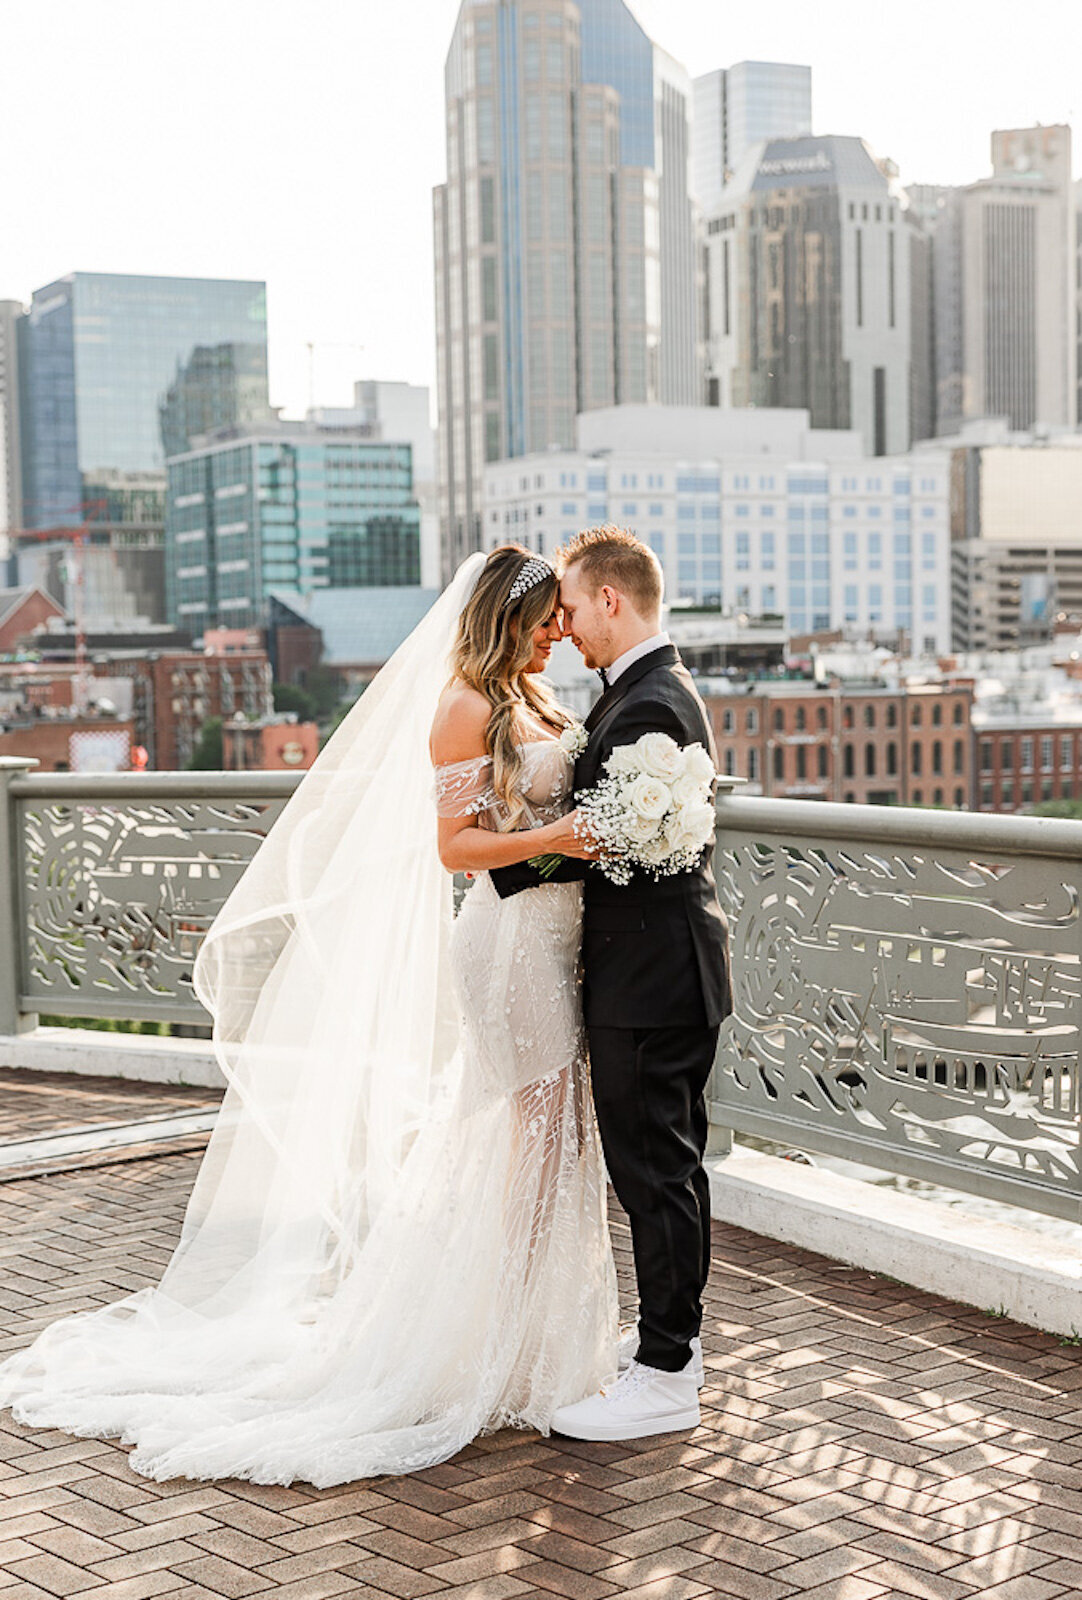 The Bridge Building - Wedding Photography - Lydia McRae Photography -54